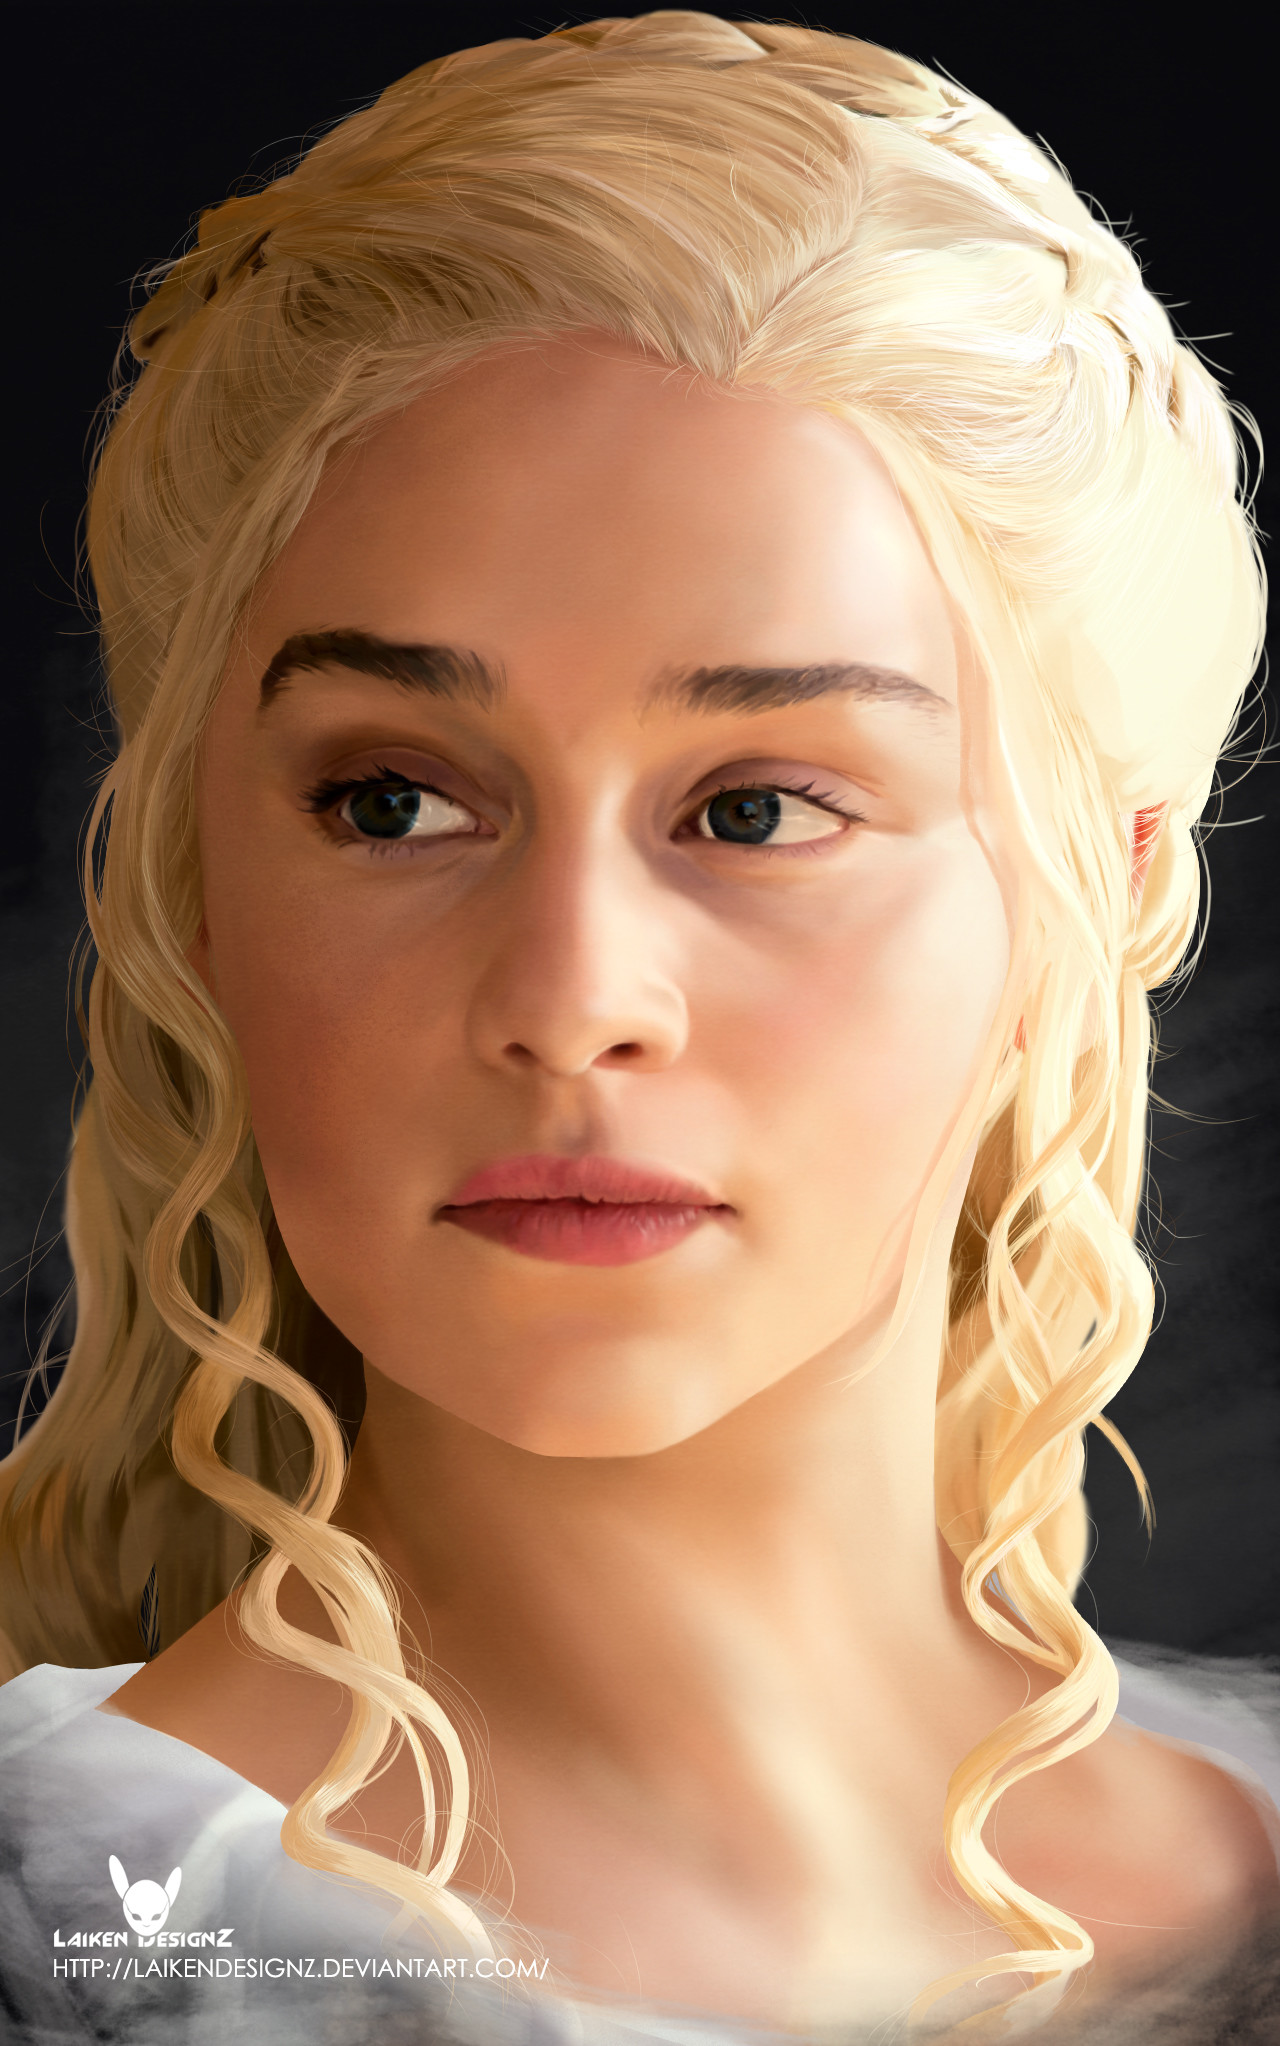 Daenerys Targaryen Painting At Paintingvalley Com Explore Collection Of Daenerys Targaryen